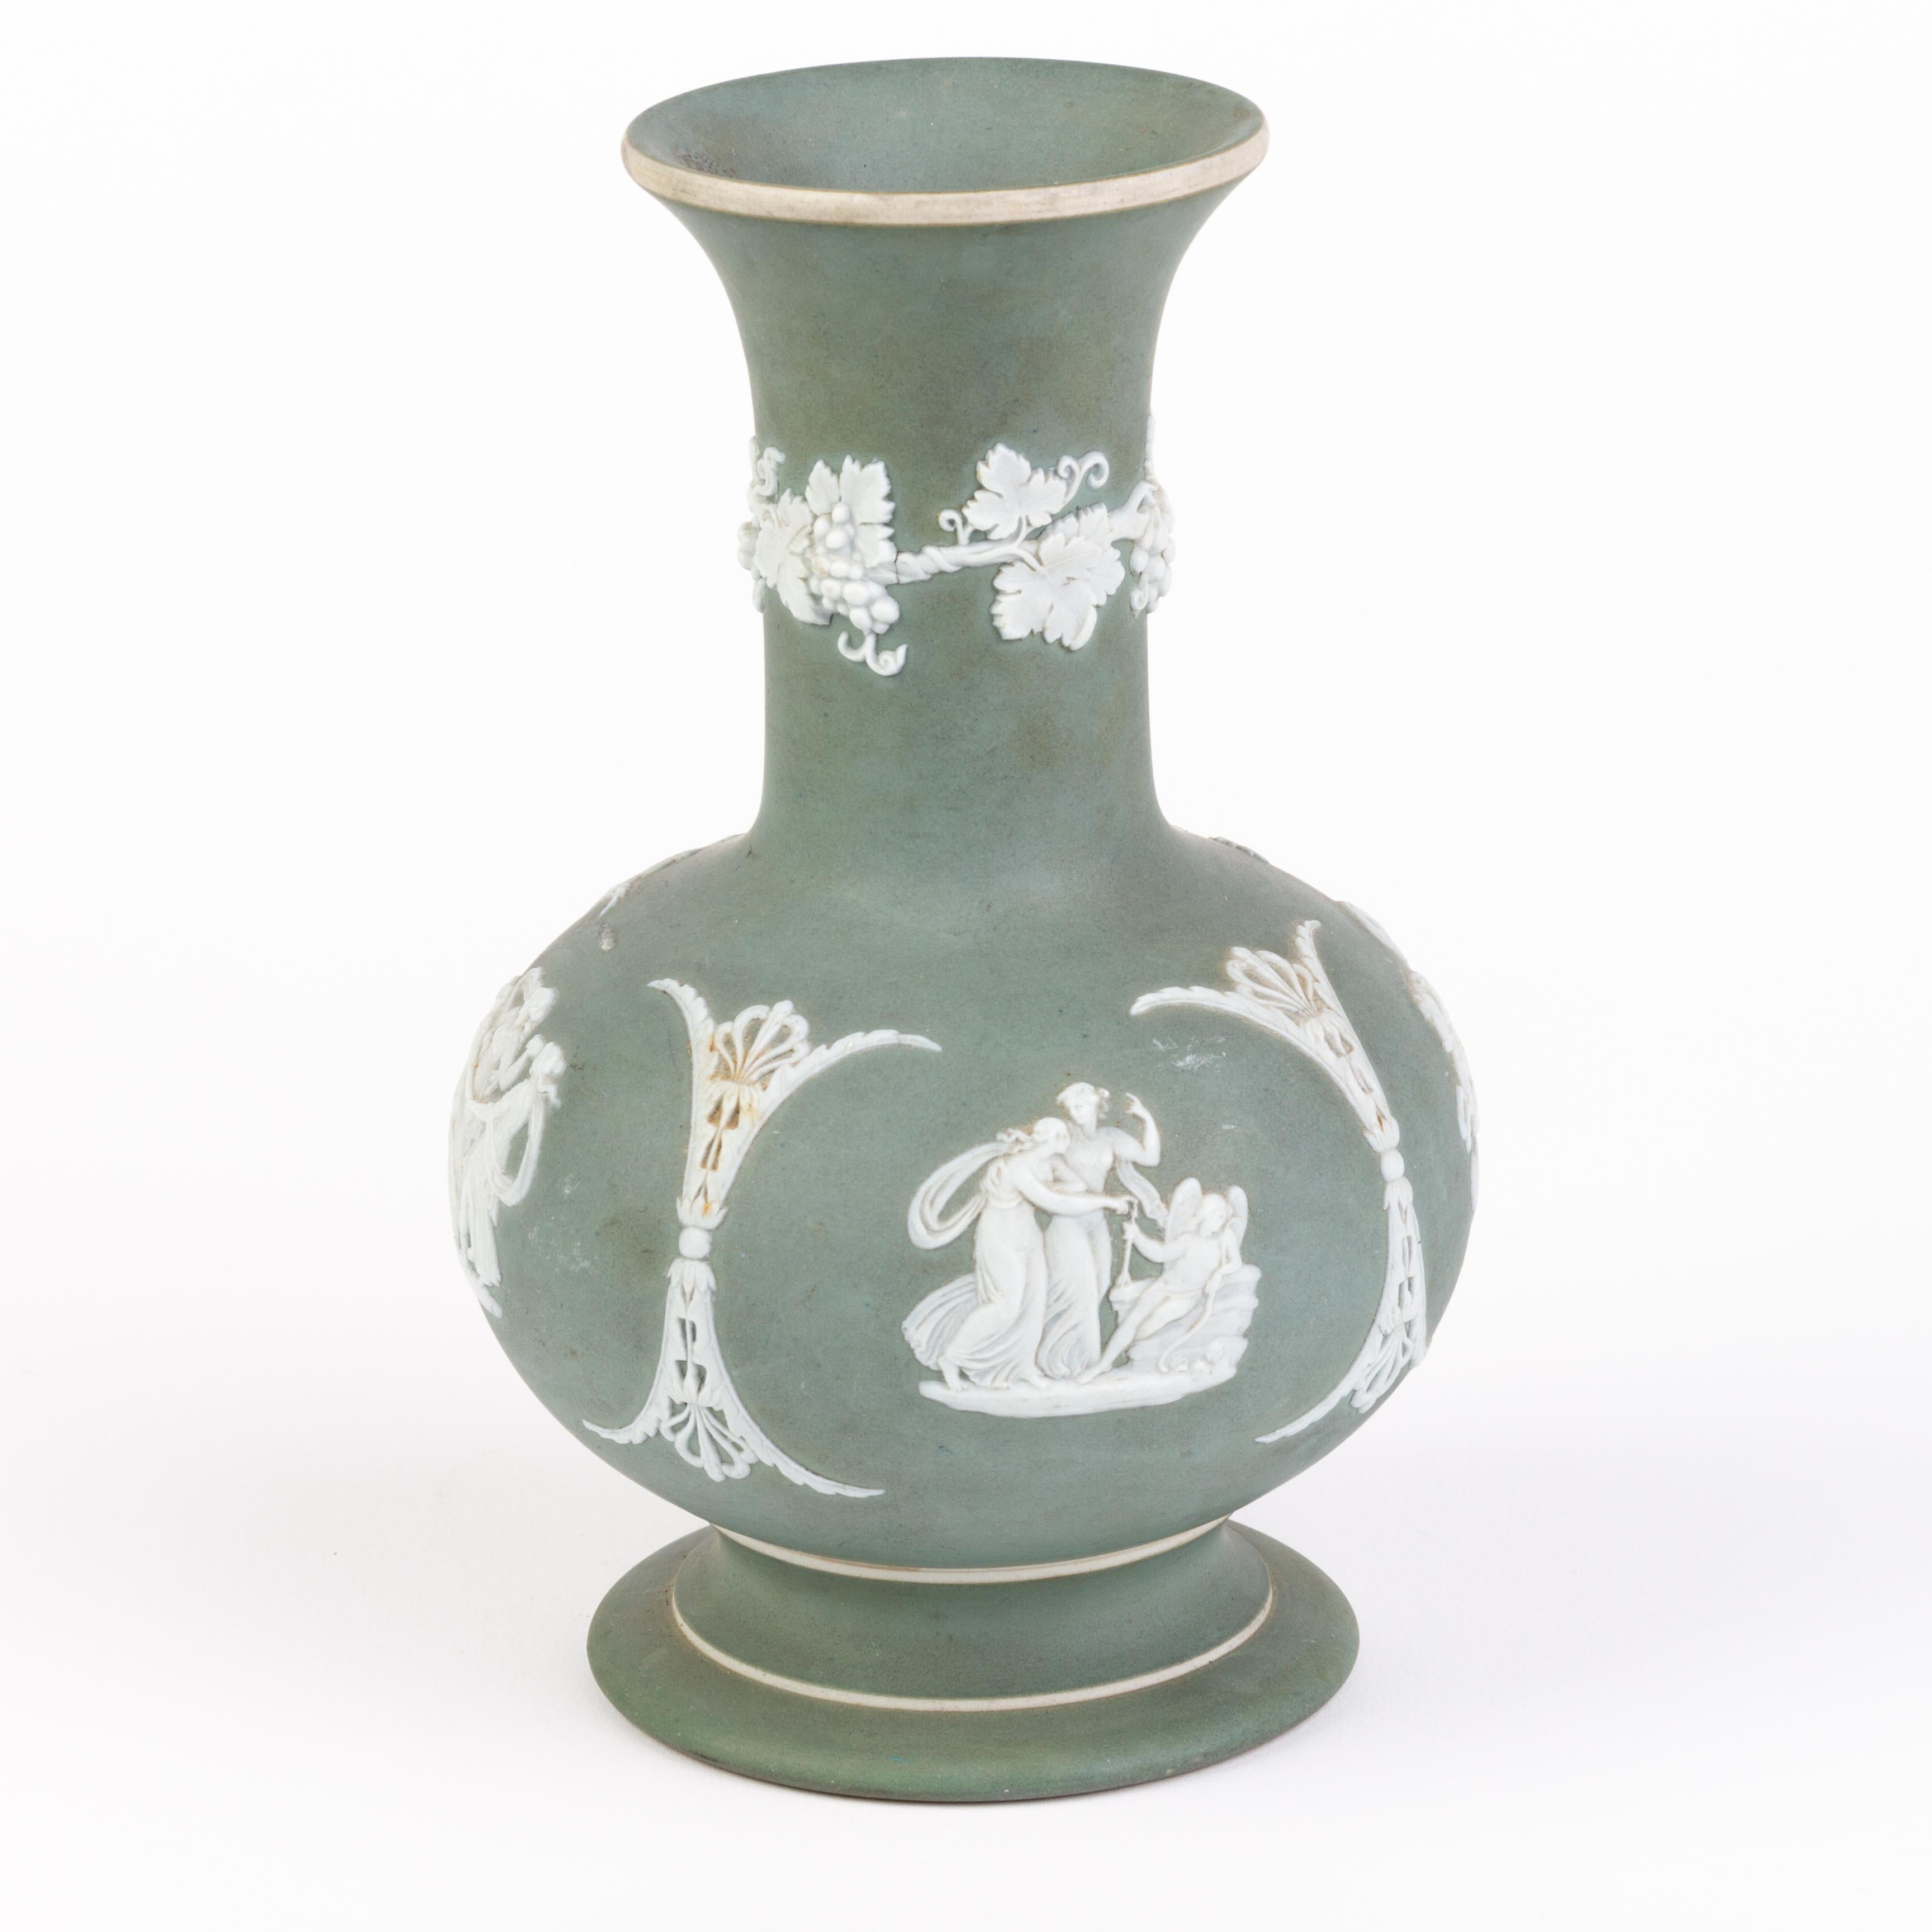 Victorian Wedgwood Light Green Jasperware Neoclassical Cameo Baluster Vase
Good condition
Free international shipping.